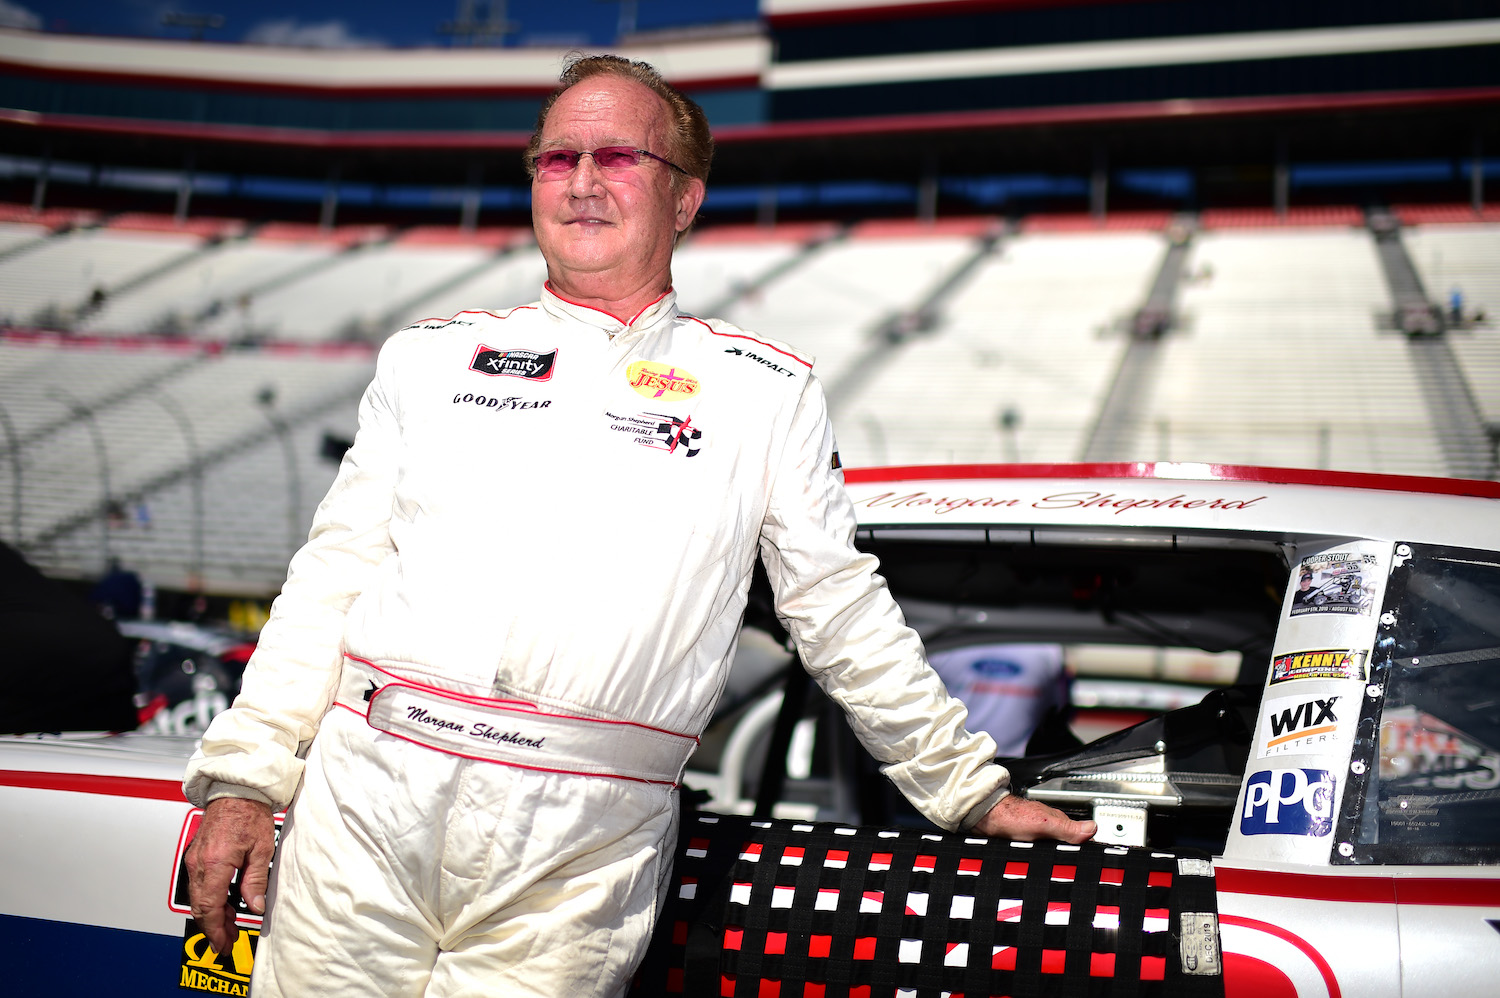 NASCAR veteran Morgan Shepherd